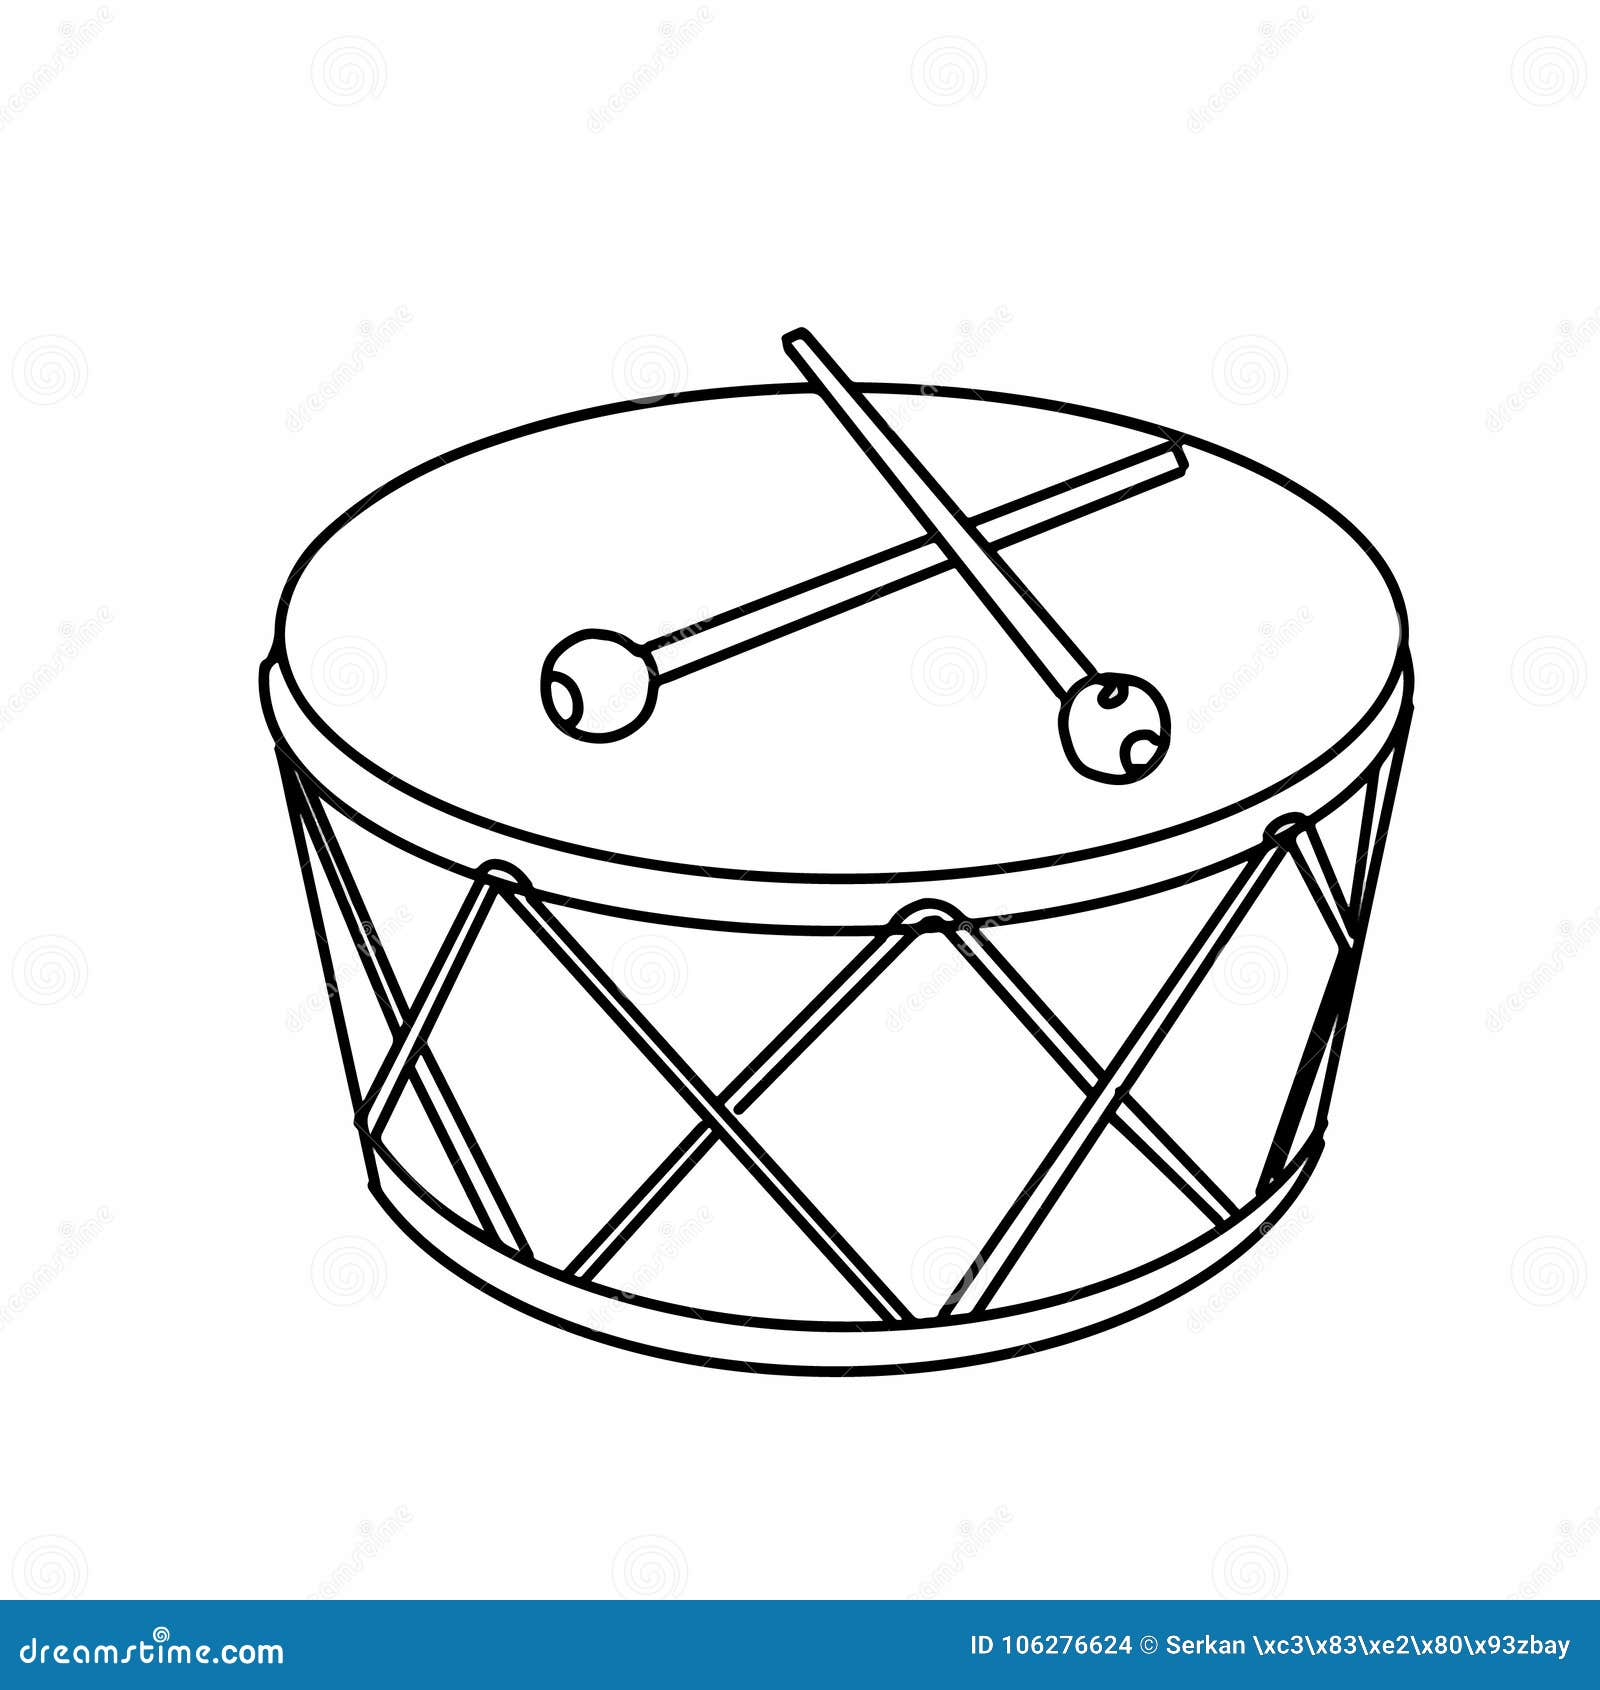 23464 Drum Drawings Images Stock Photos  Vectors  Shutterstock